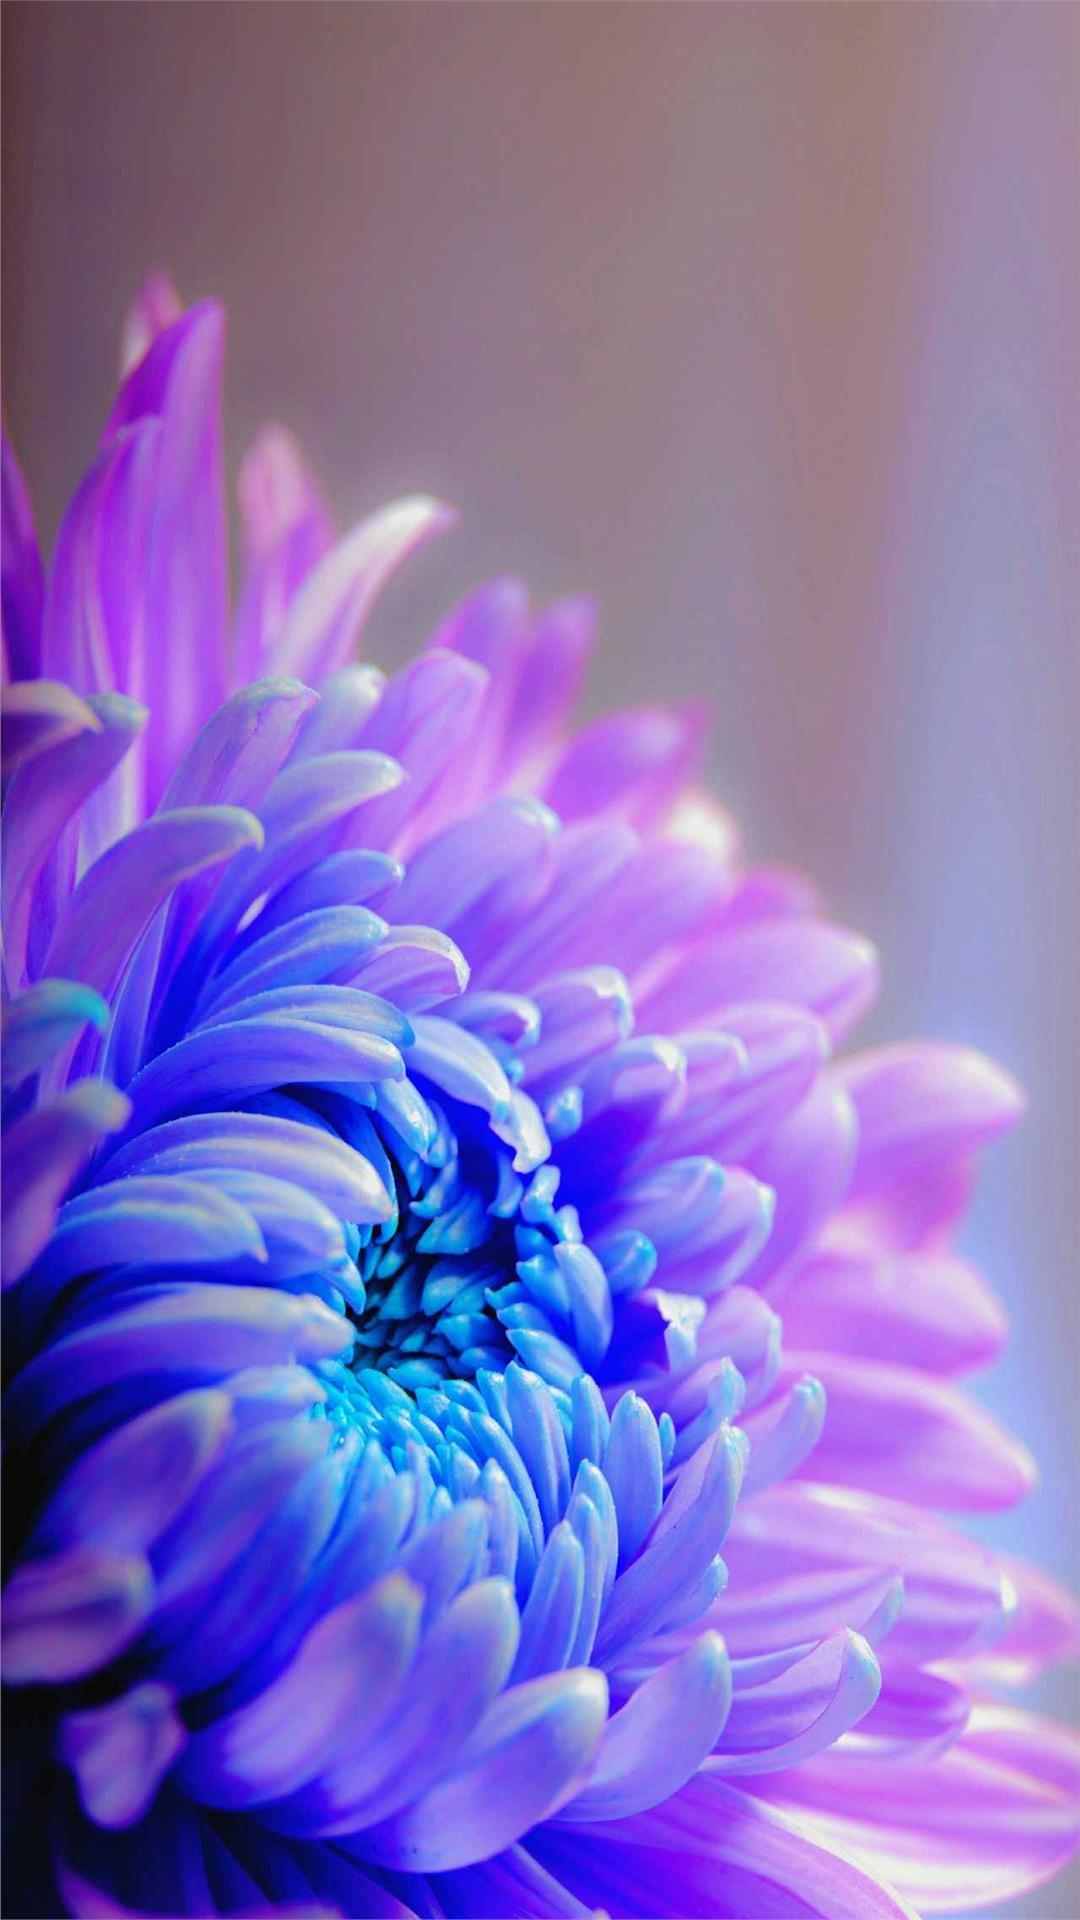 Chrysanthemum Flower iPhone Wallpaper